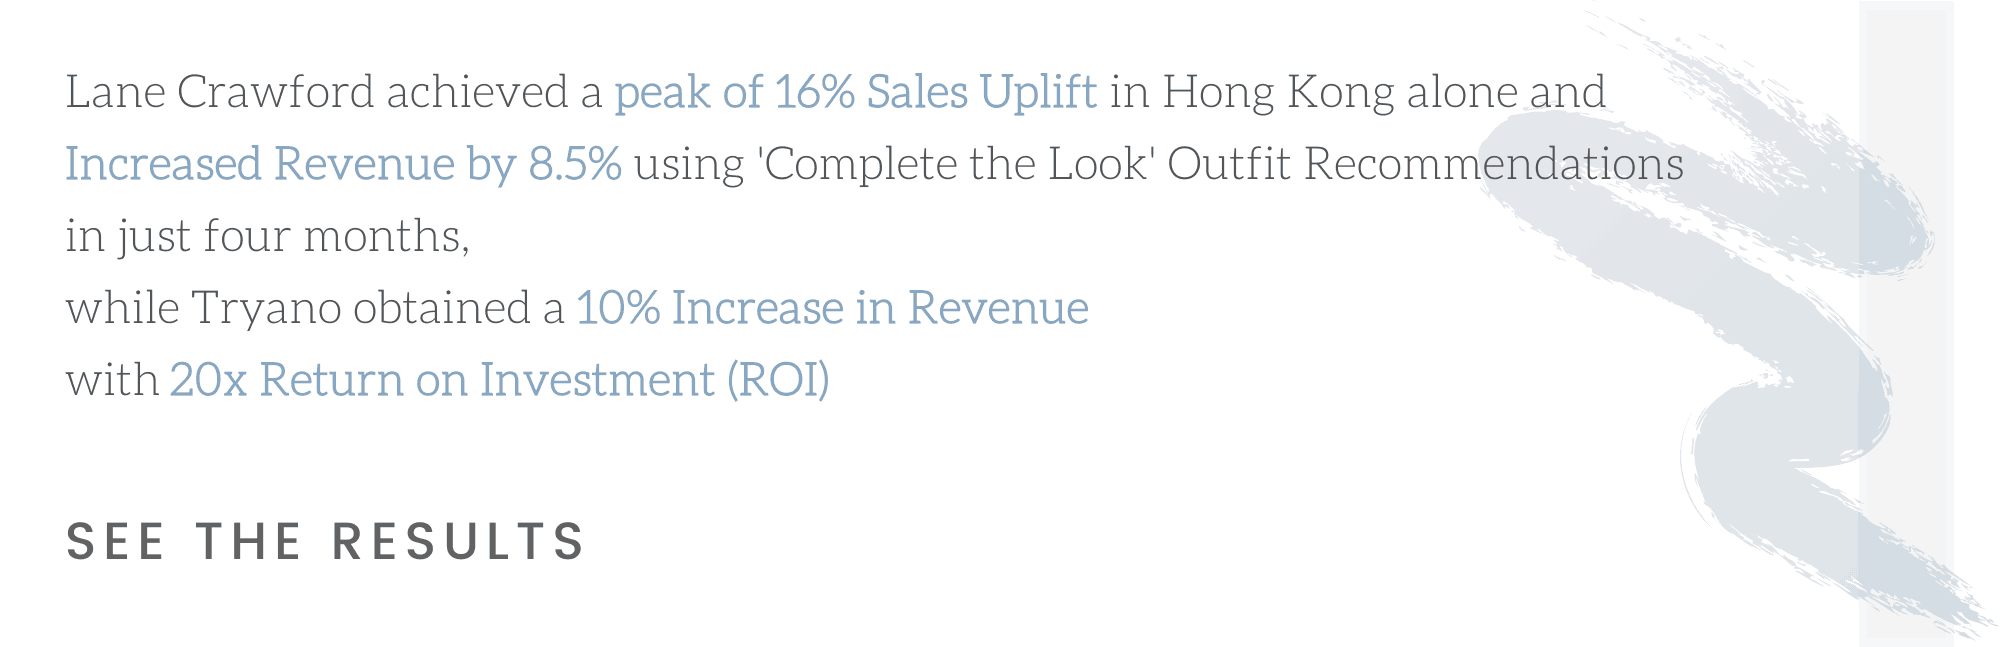 AI Outfit Recommendations Revenue Uplift